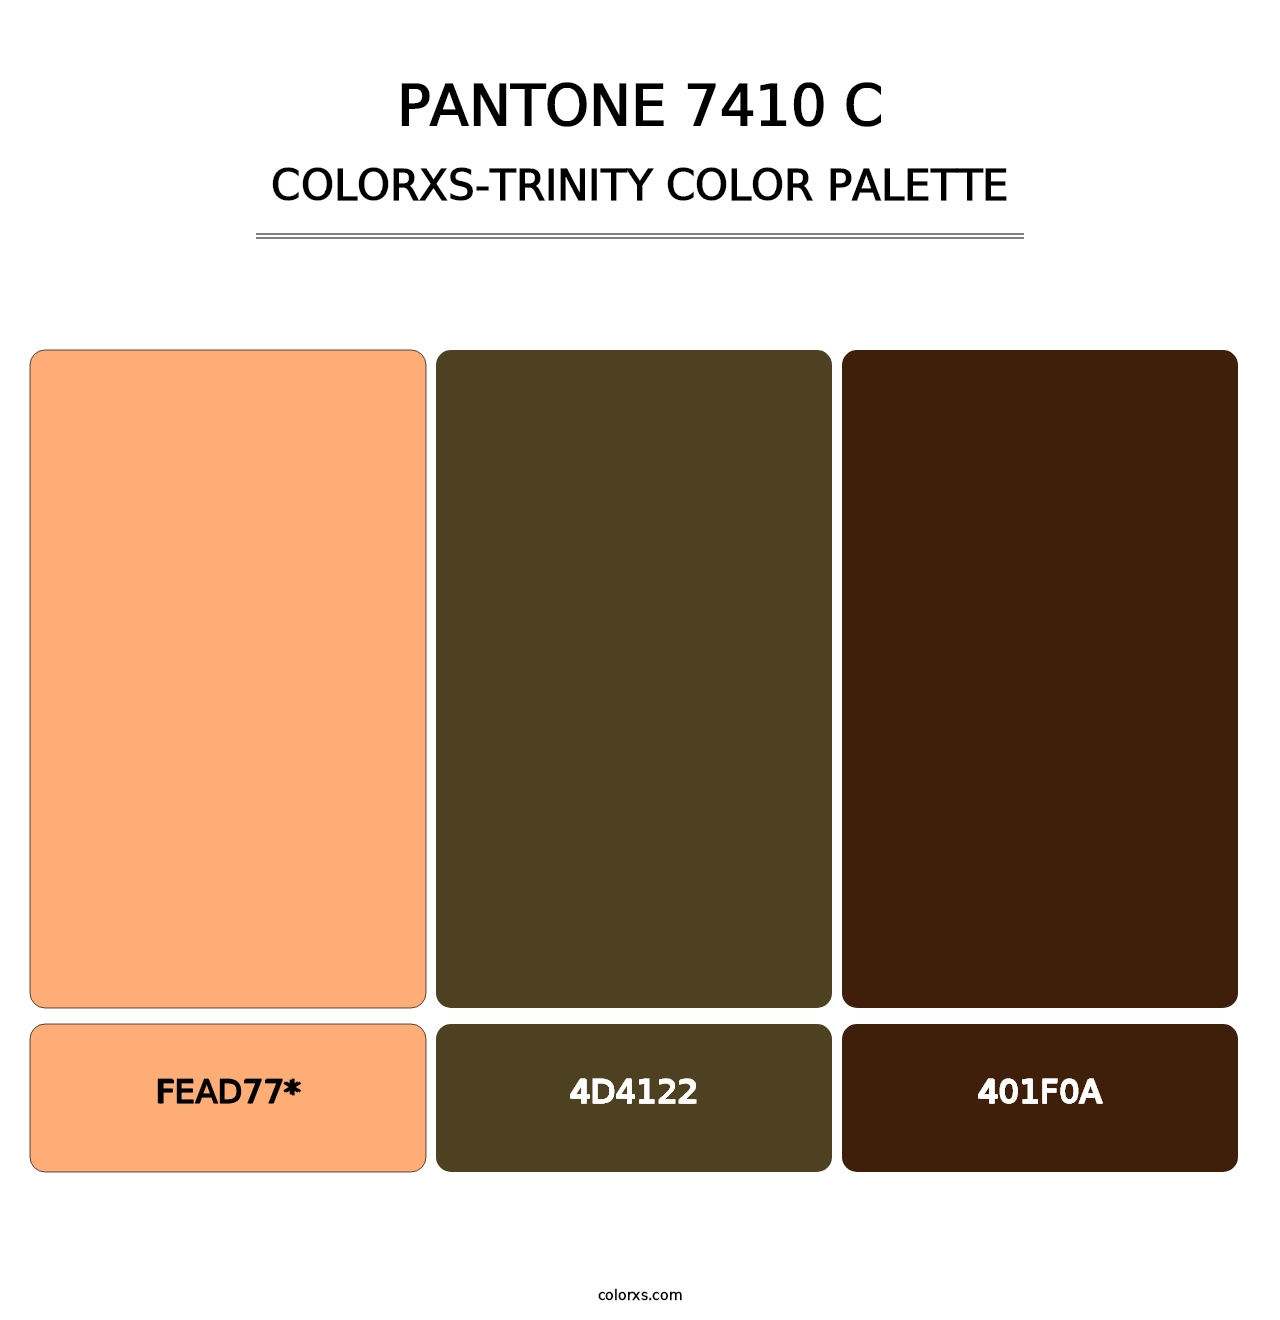 PANTONE 7410 C - Colorxs Trinity Palette